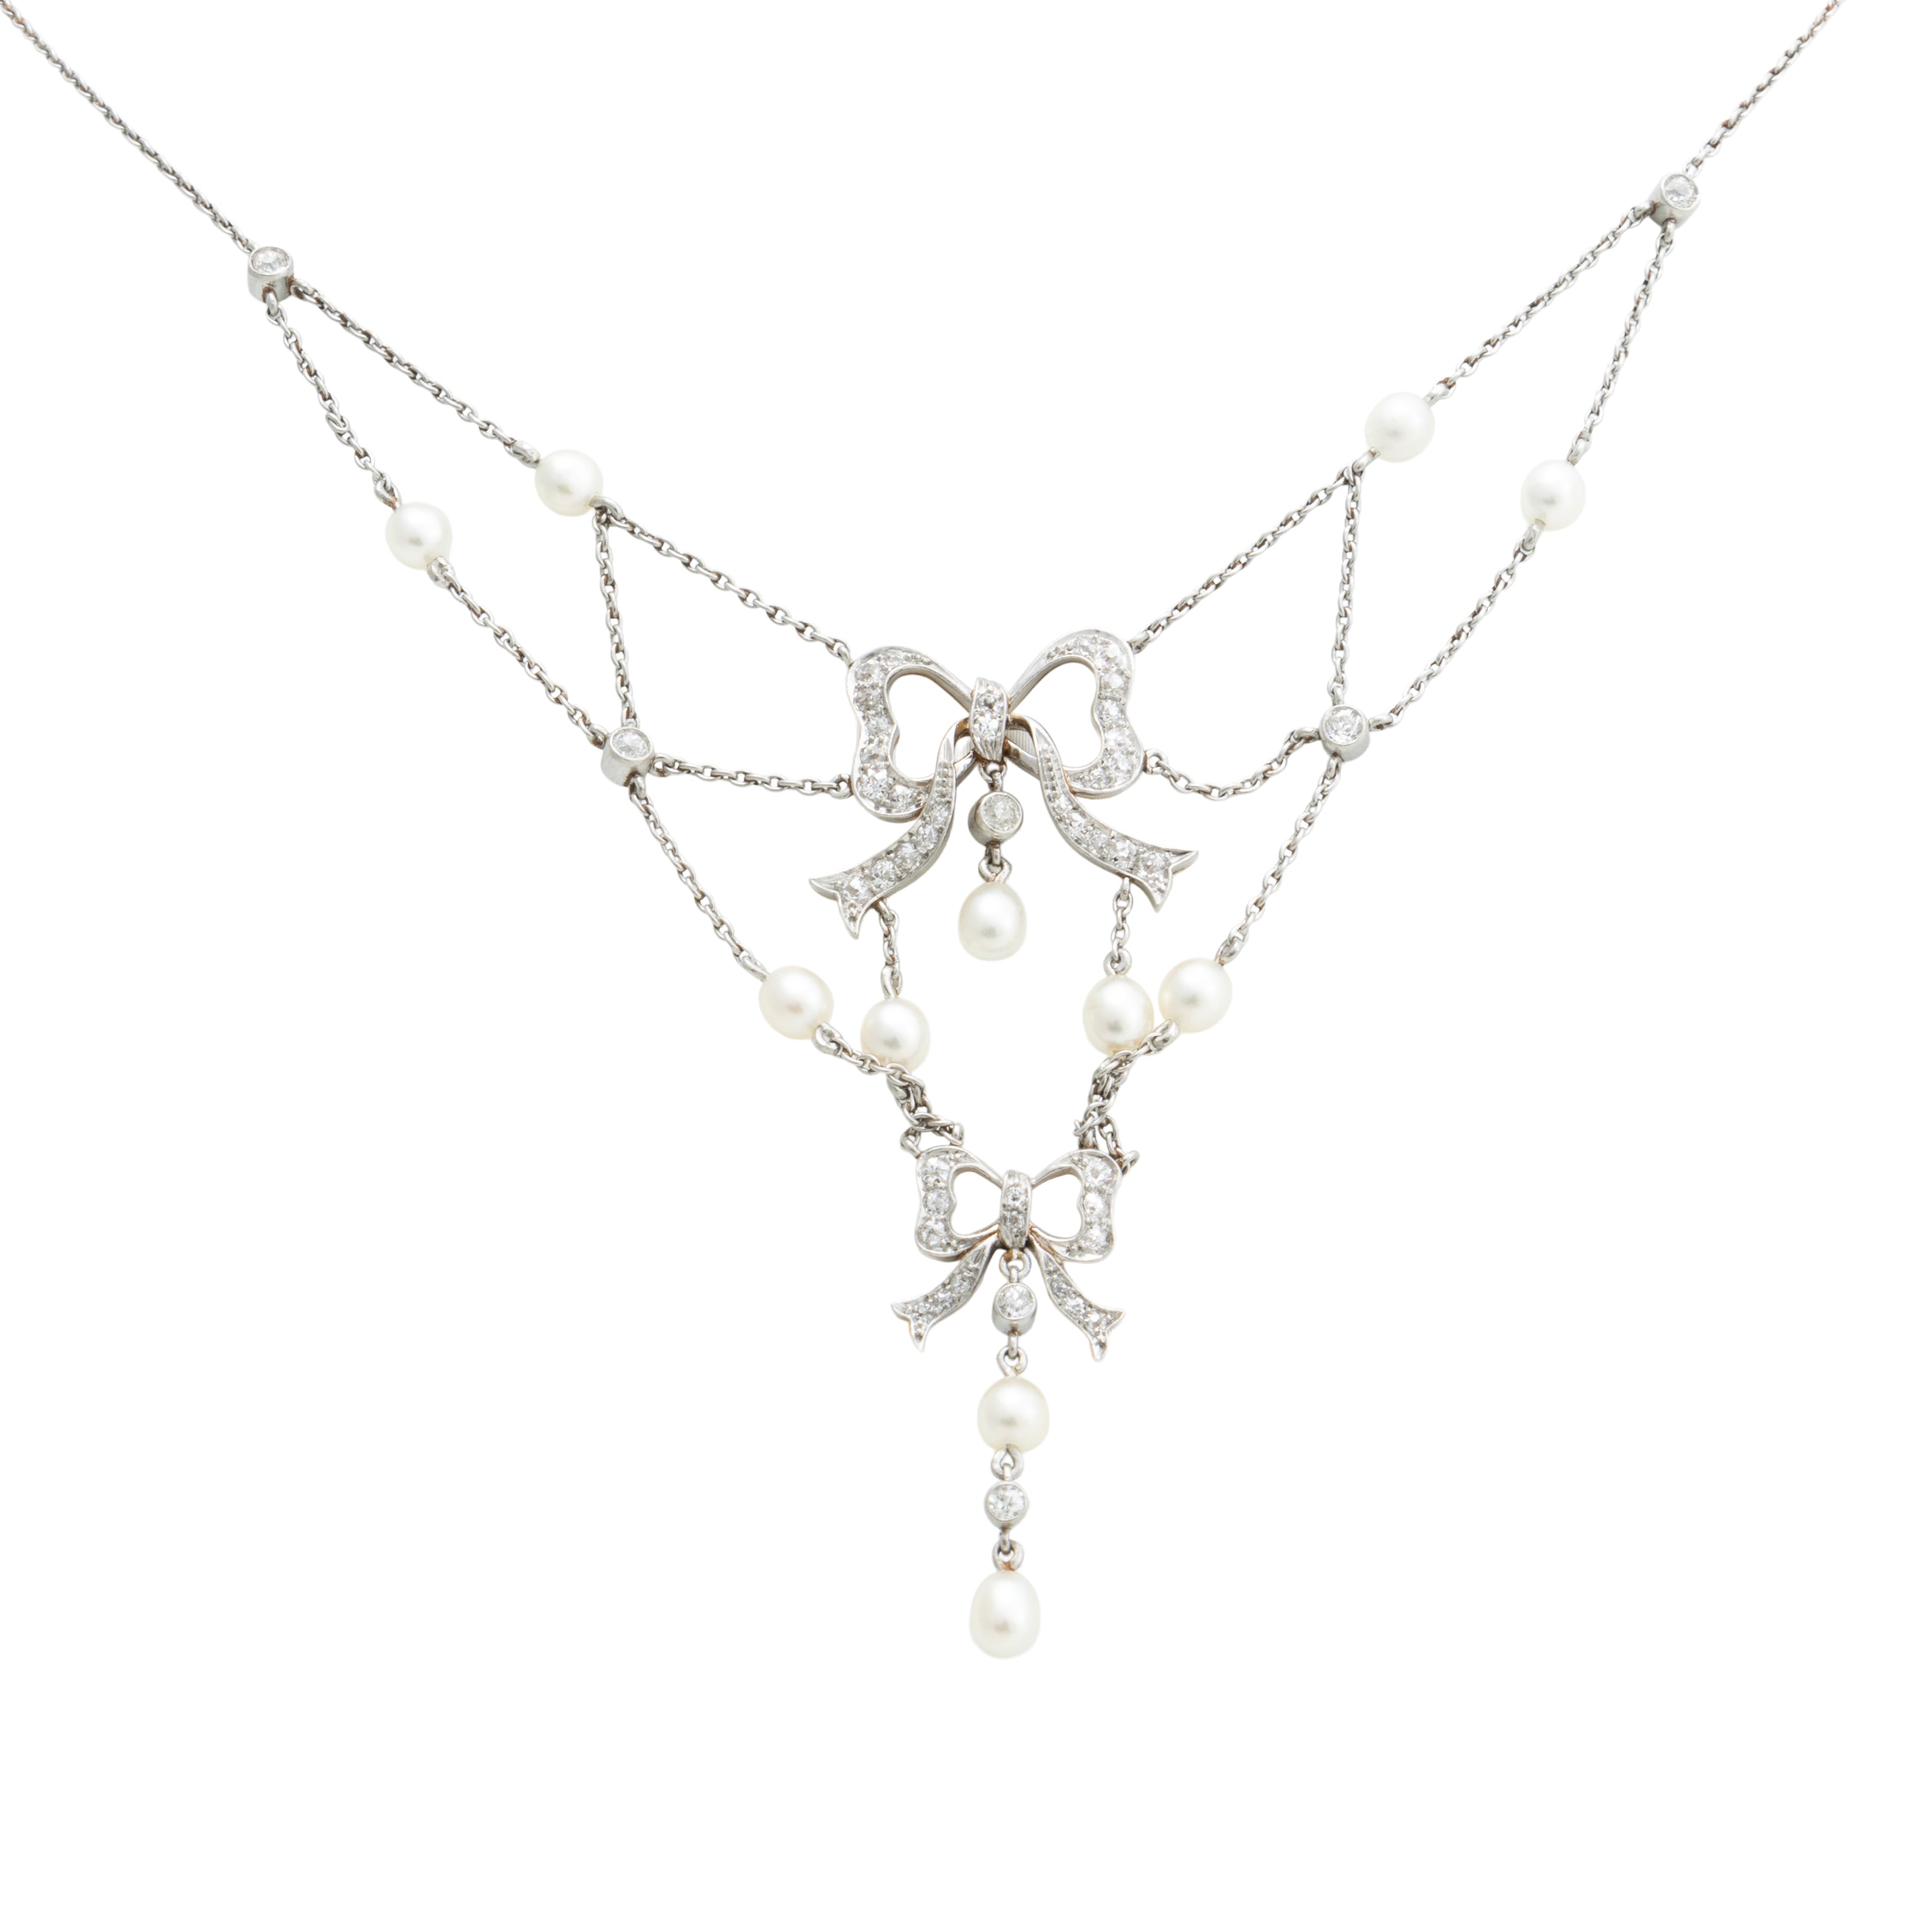 Lady's Vintage Candelabra Necklace